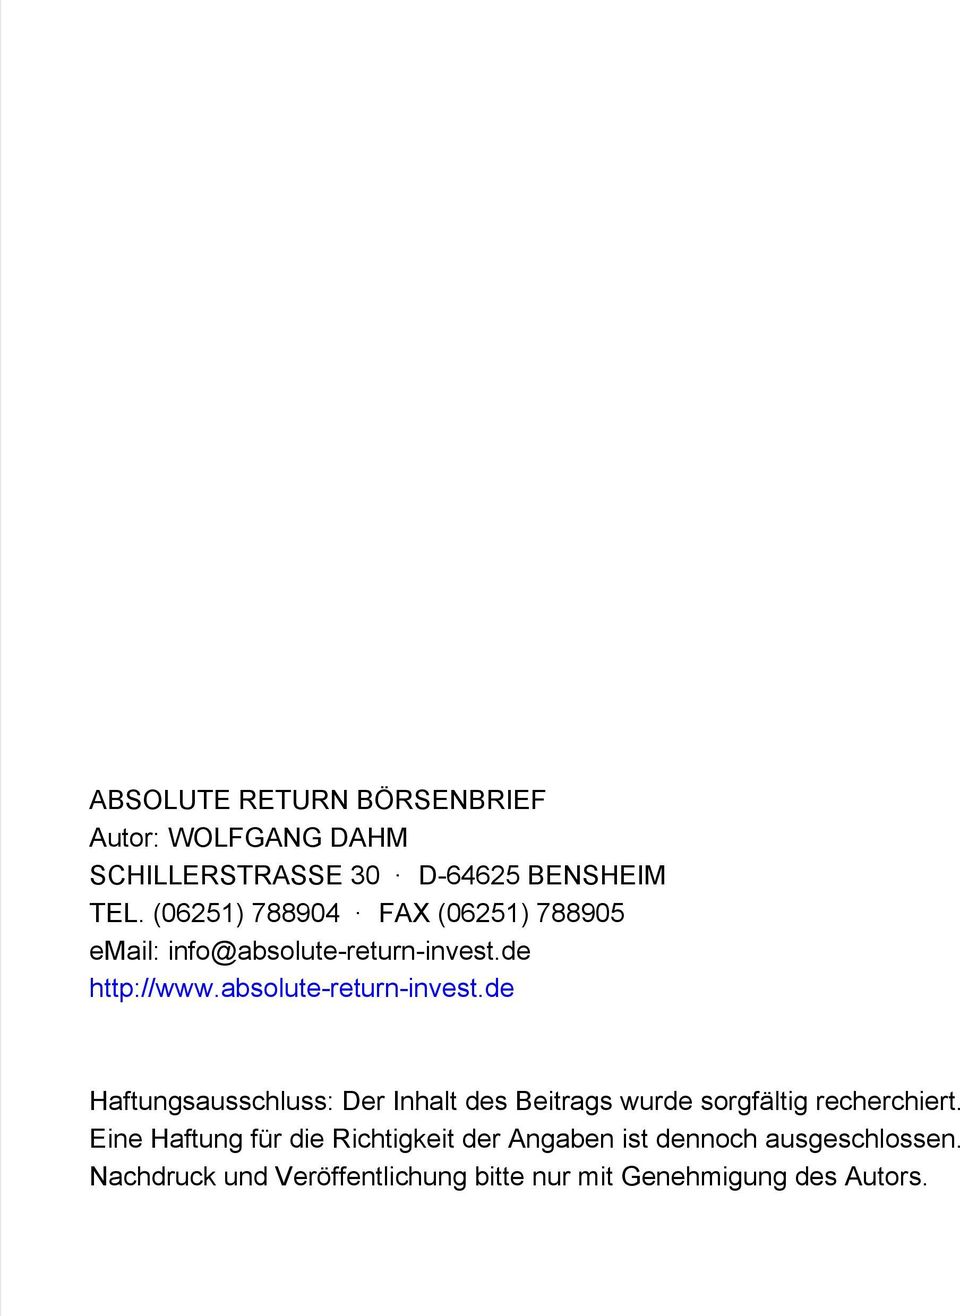 absolute-return-invest.de Haftungsausschluss: Der Inhalt des Beitrags wurde sorgfältig recherchiert.